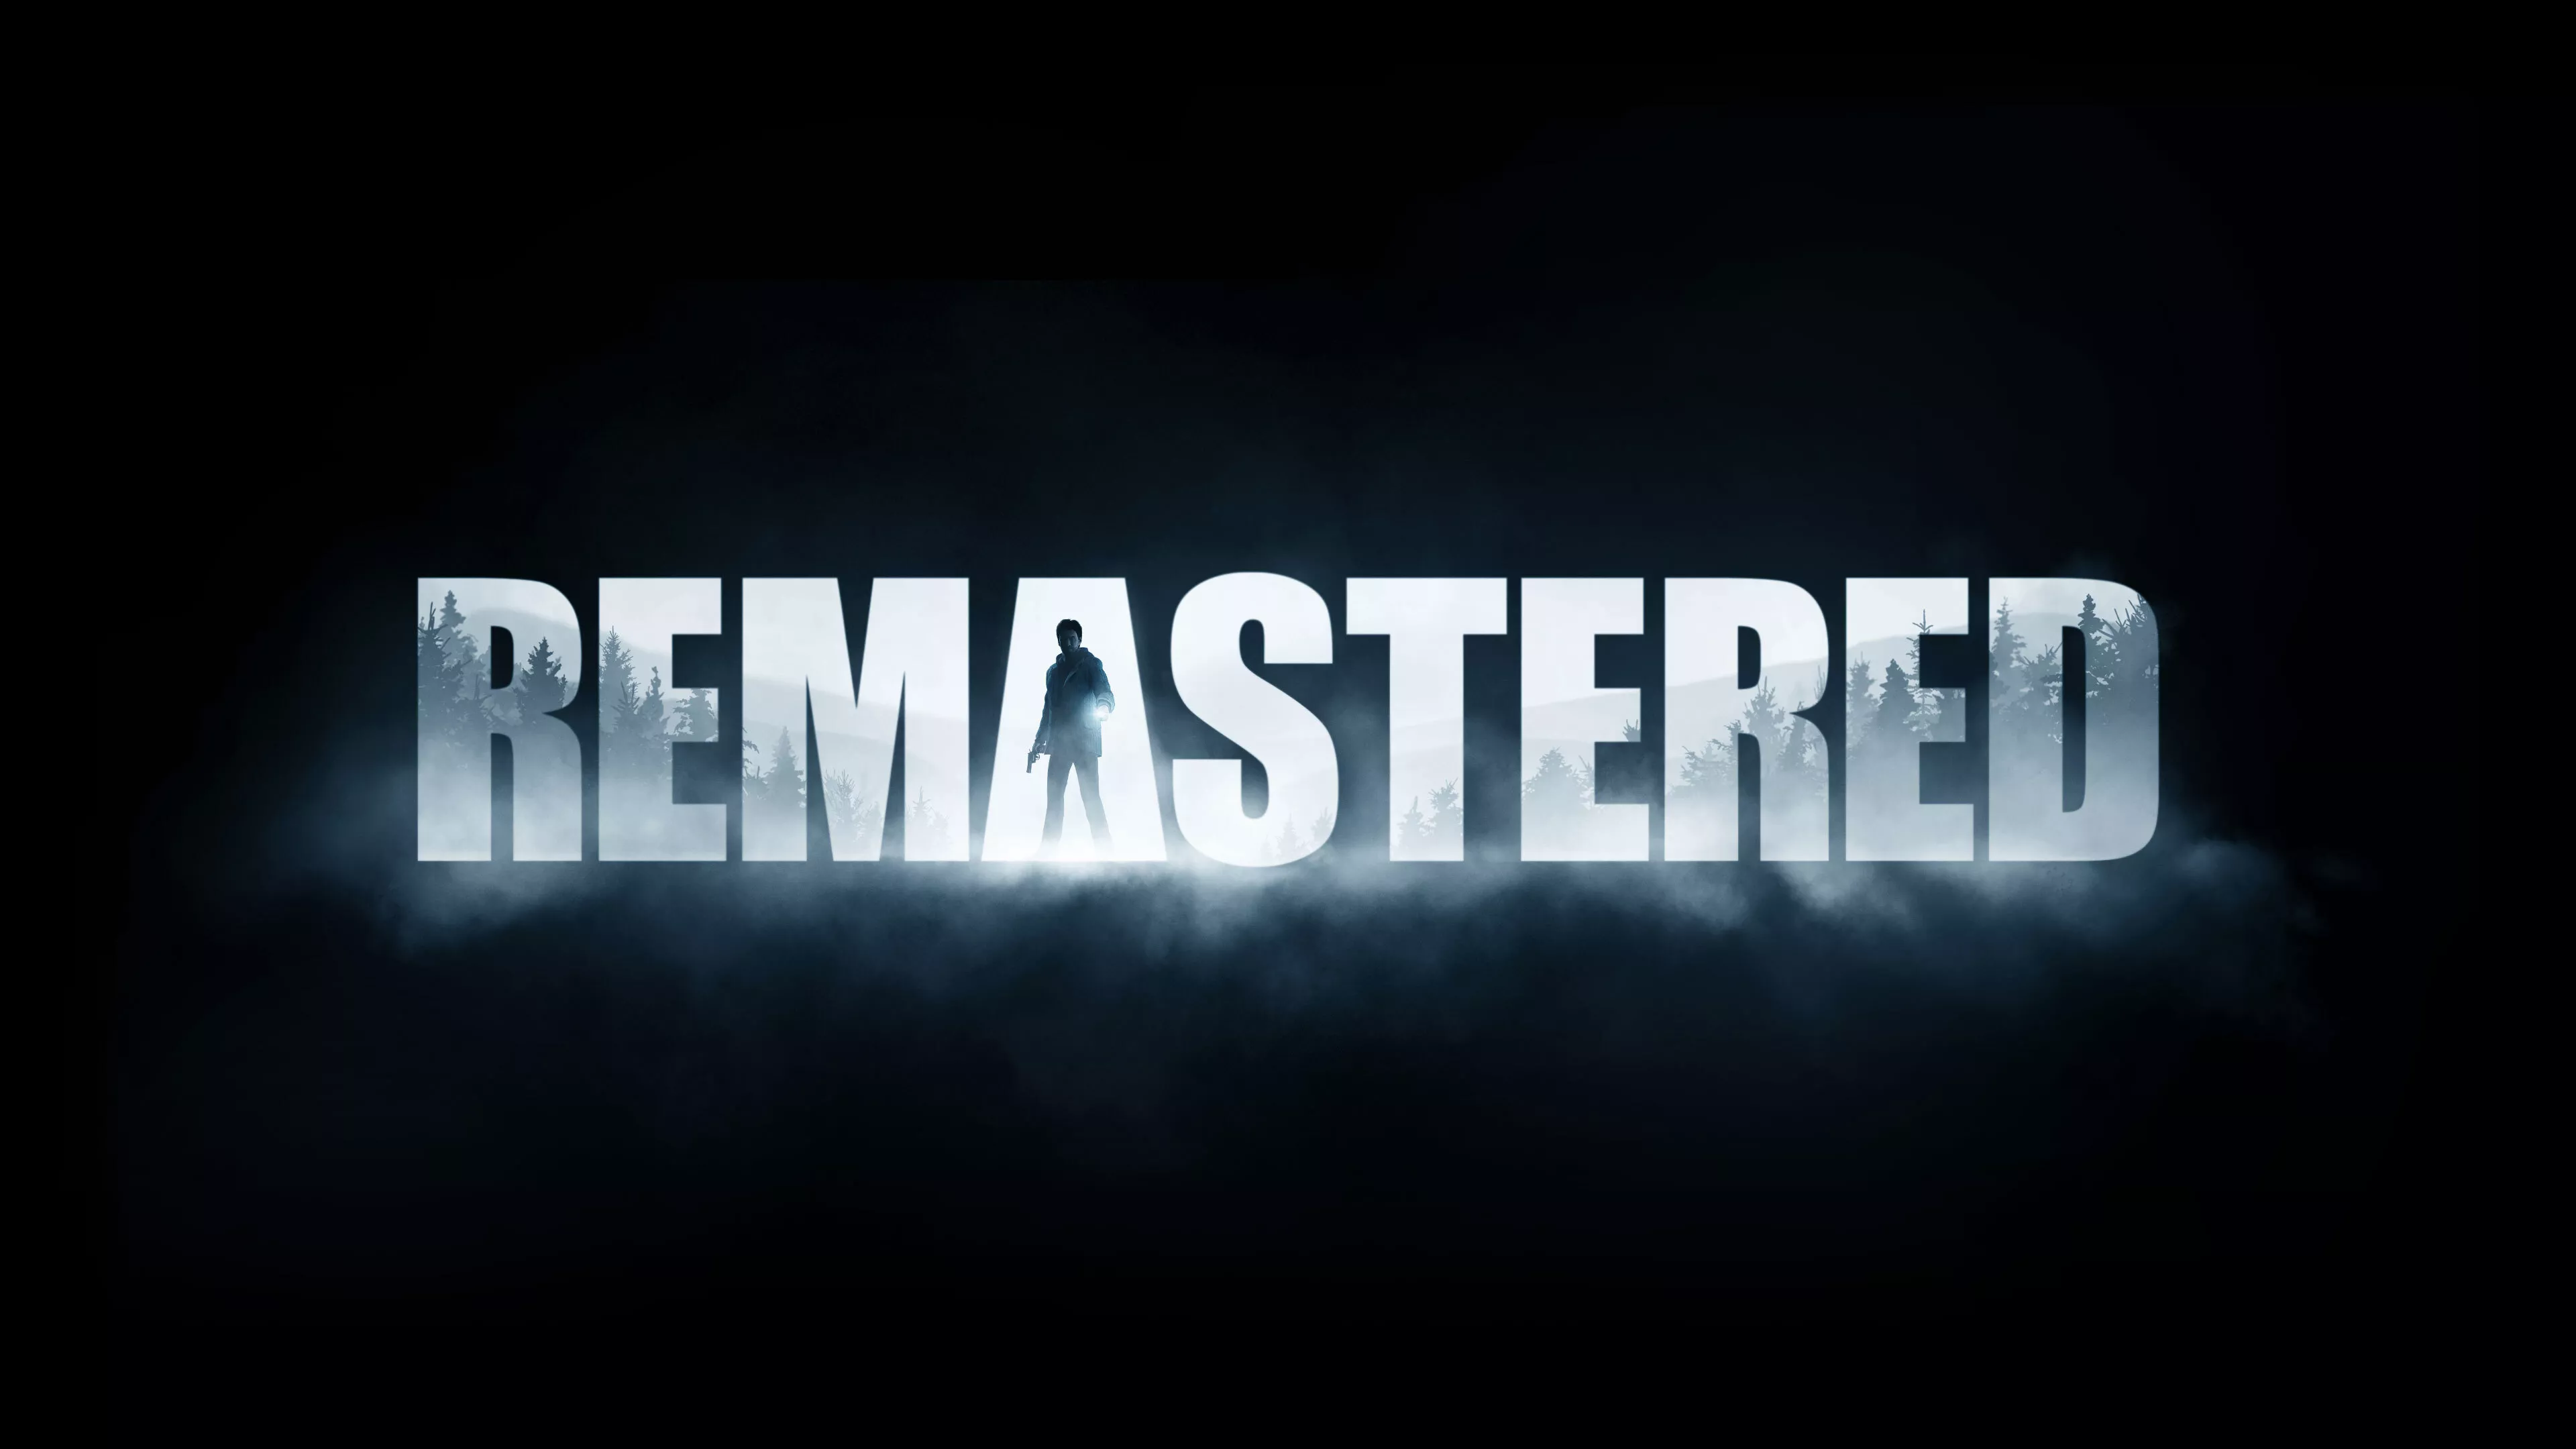 Alan Wake Remastered erscheint am 5. Oktober Heropic